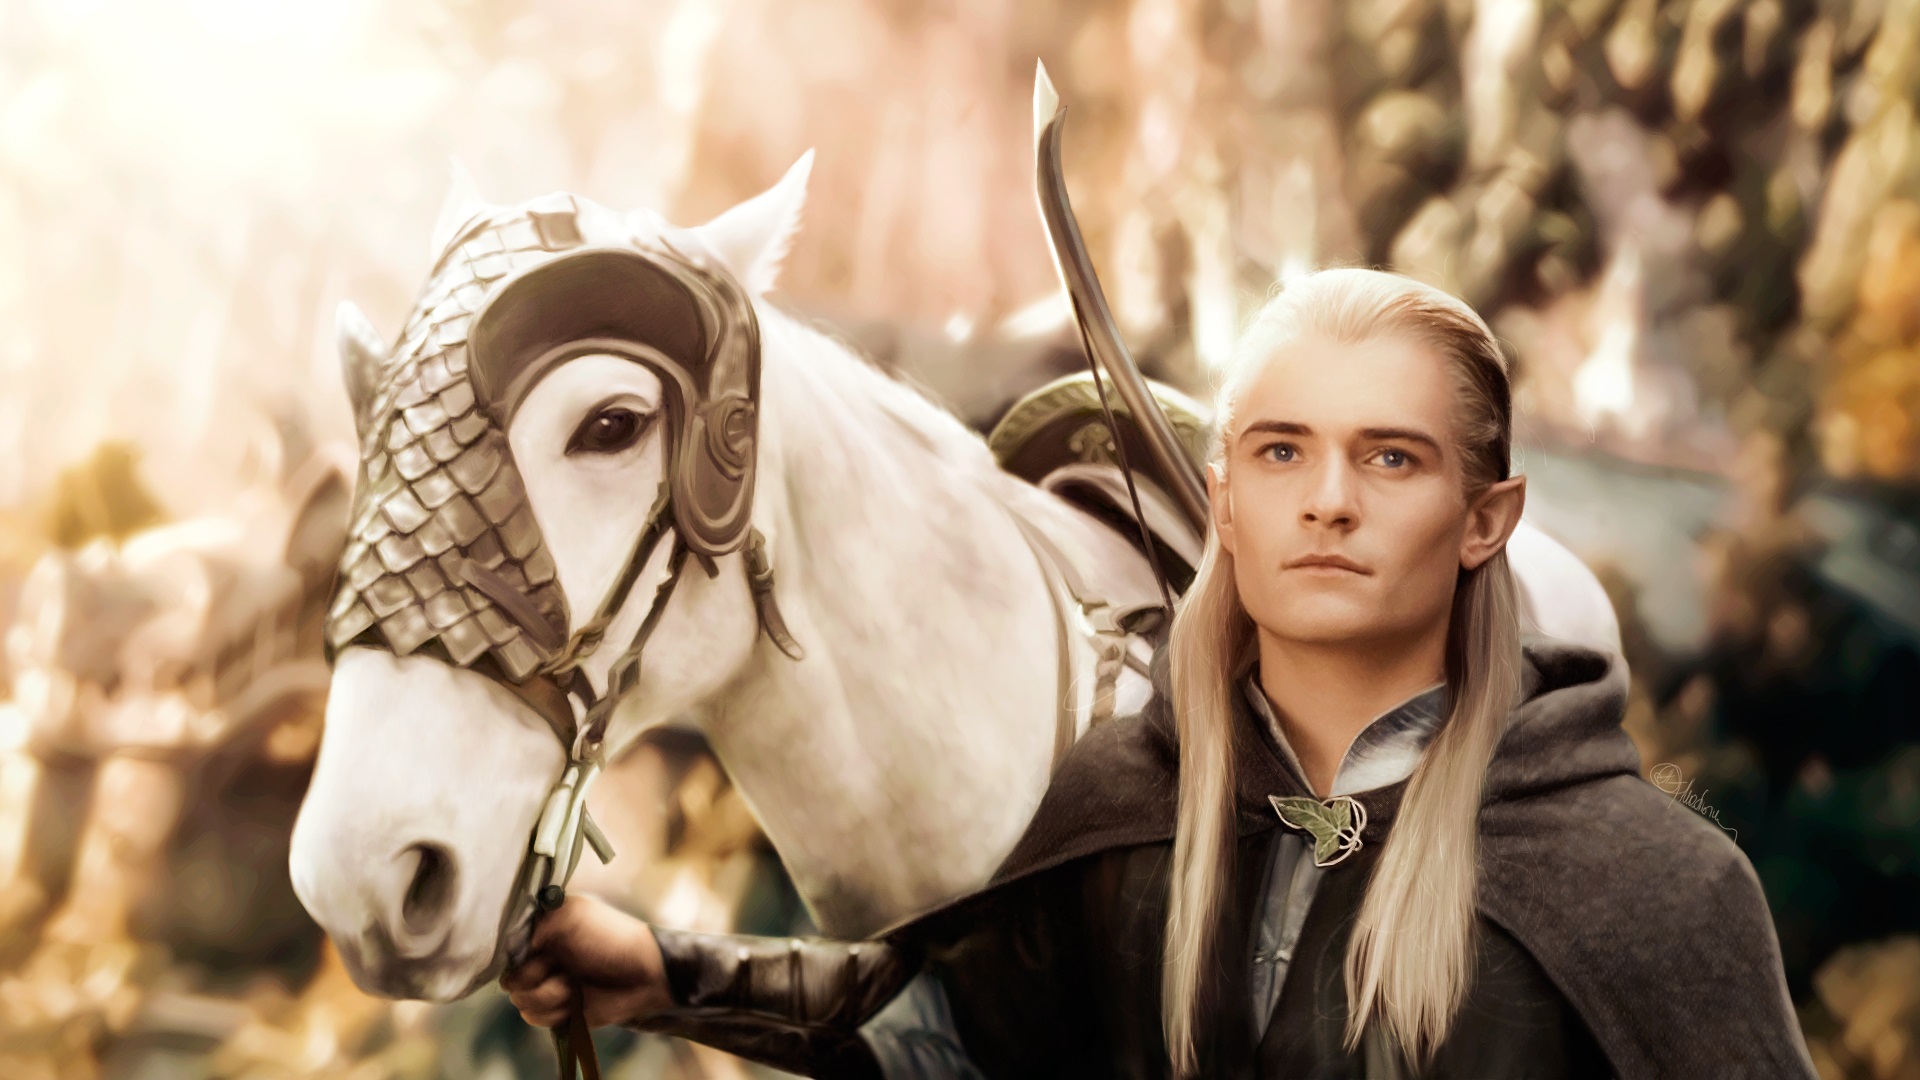 People 1920x1080 Legolas Orlando Bloom horse elves men long hair blonde The Lord of the Rings movies actor Arod